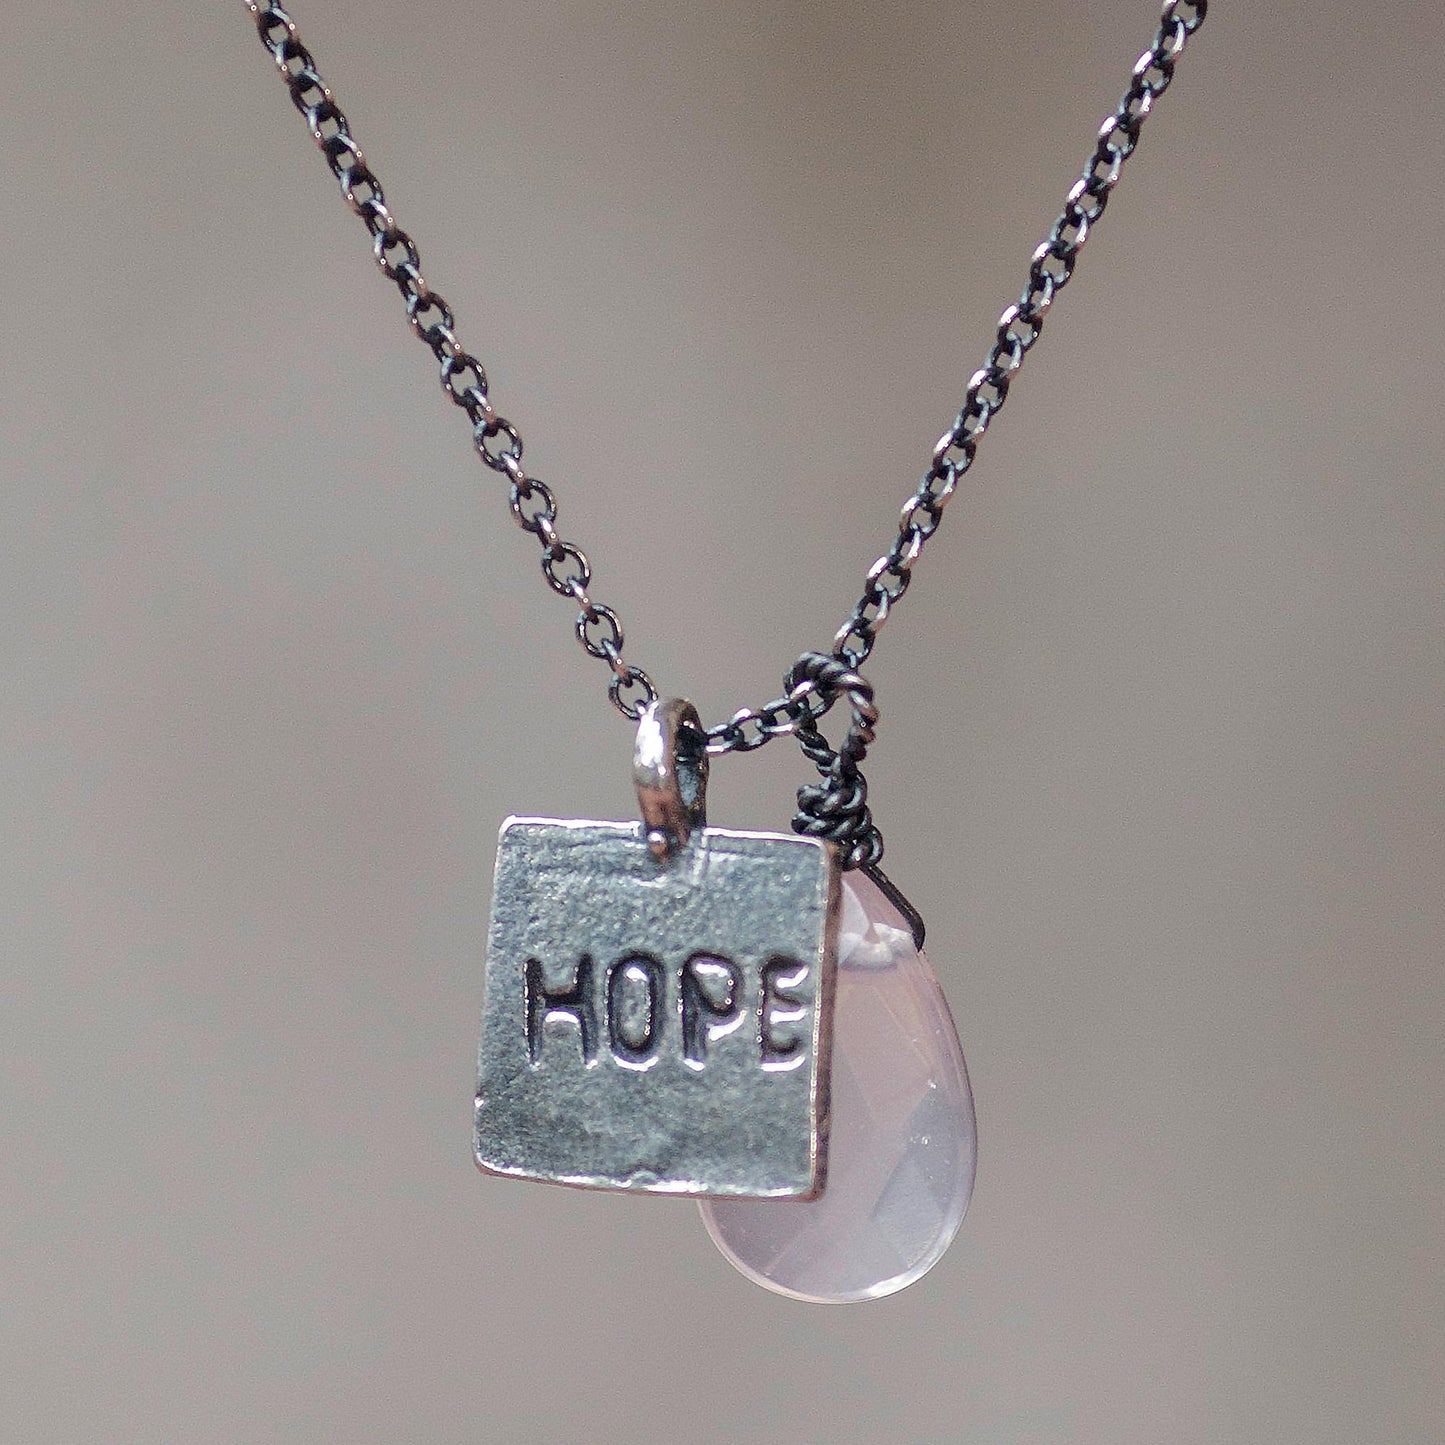 Inspiring Hope Sterling Silver Inspirational Hope Necklace with Rose Quartz